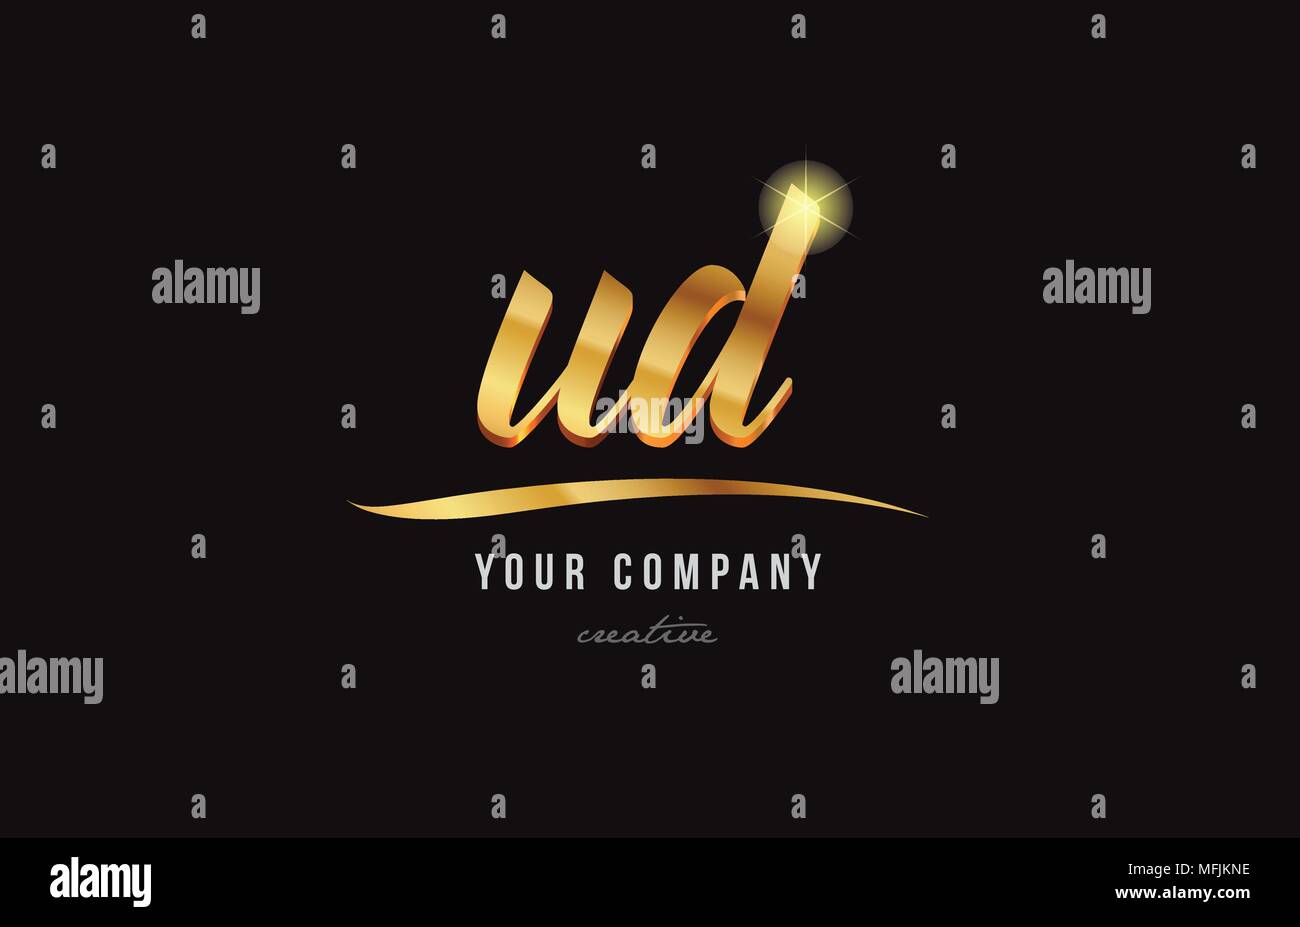 gold golden alphabet letter ud u d logo combination design suitable for a company or business Stock Vector